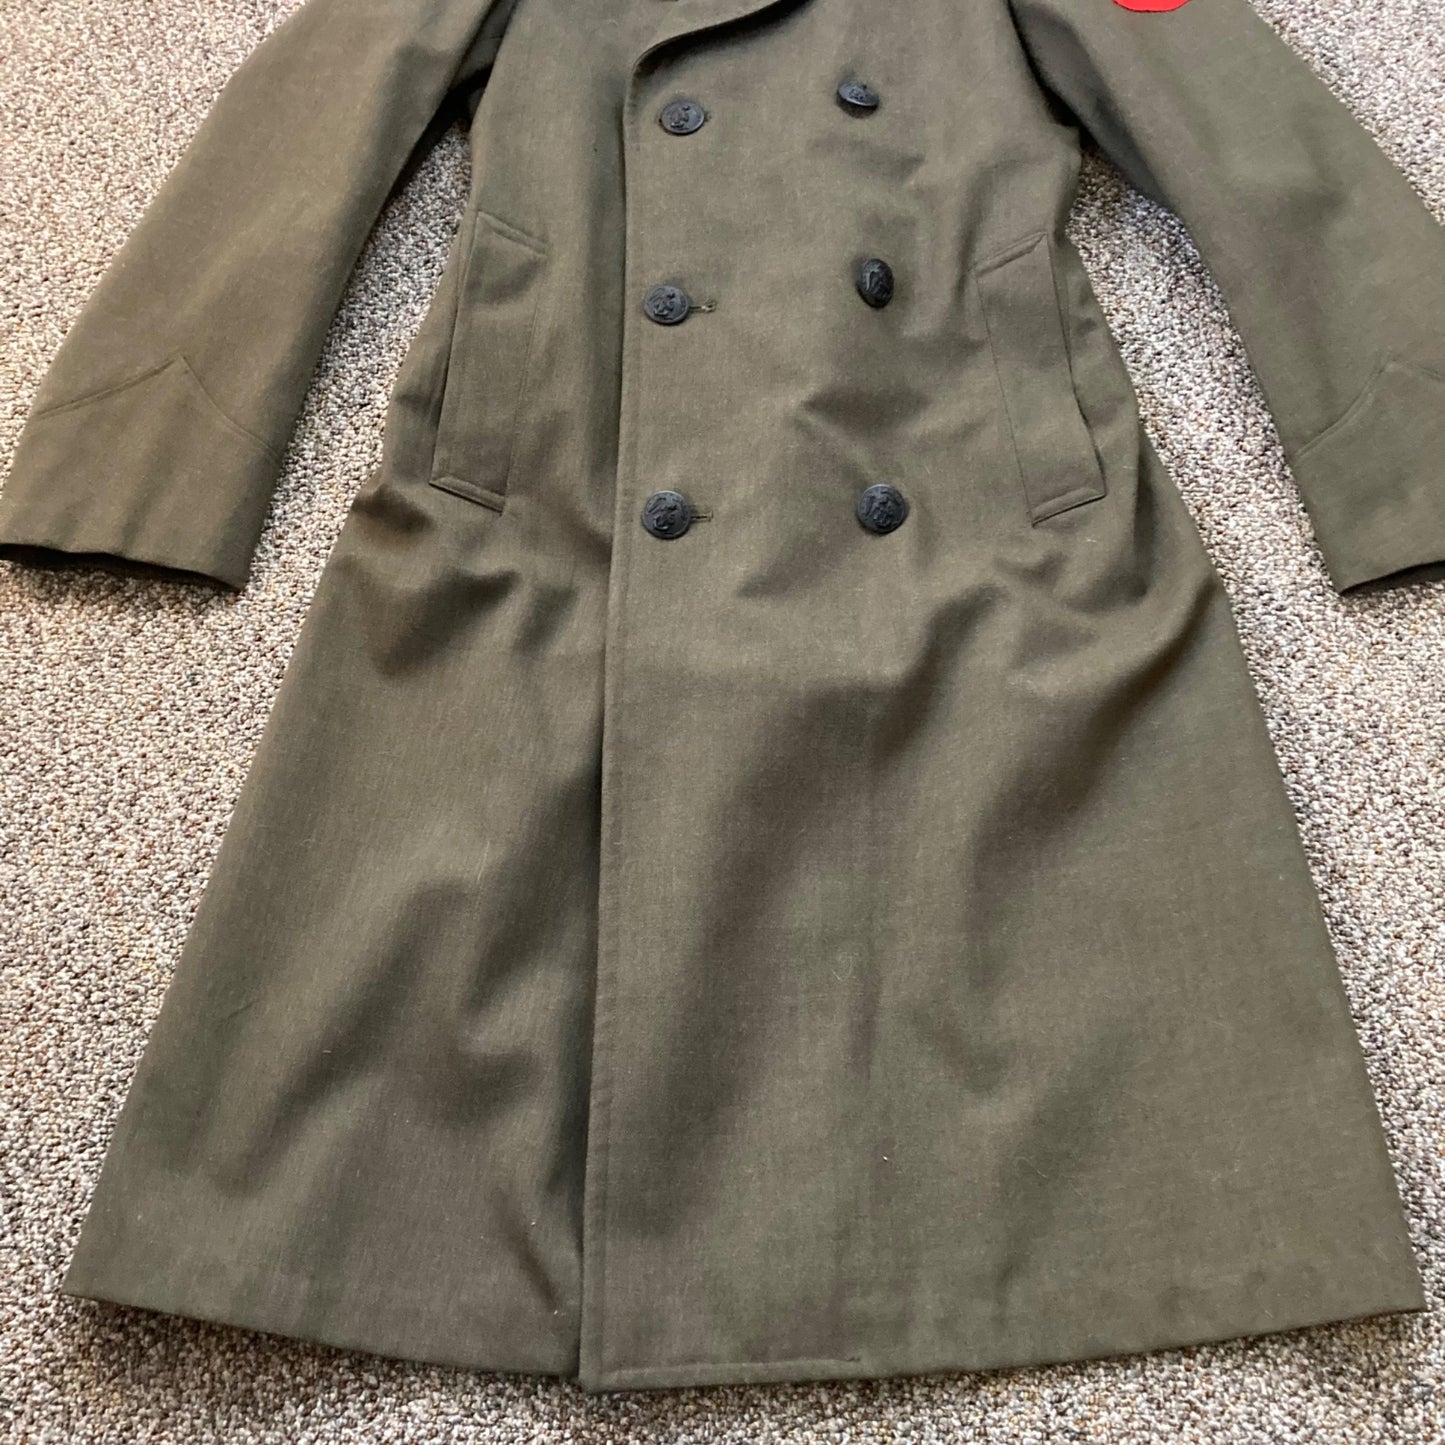 Vintage USMC Overcoat Man's Wool OD Green Dress Uniform w/Rank Trench Coat